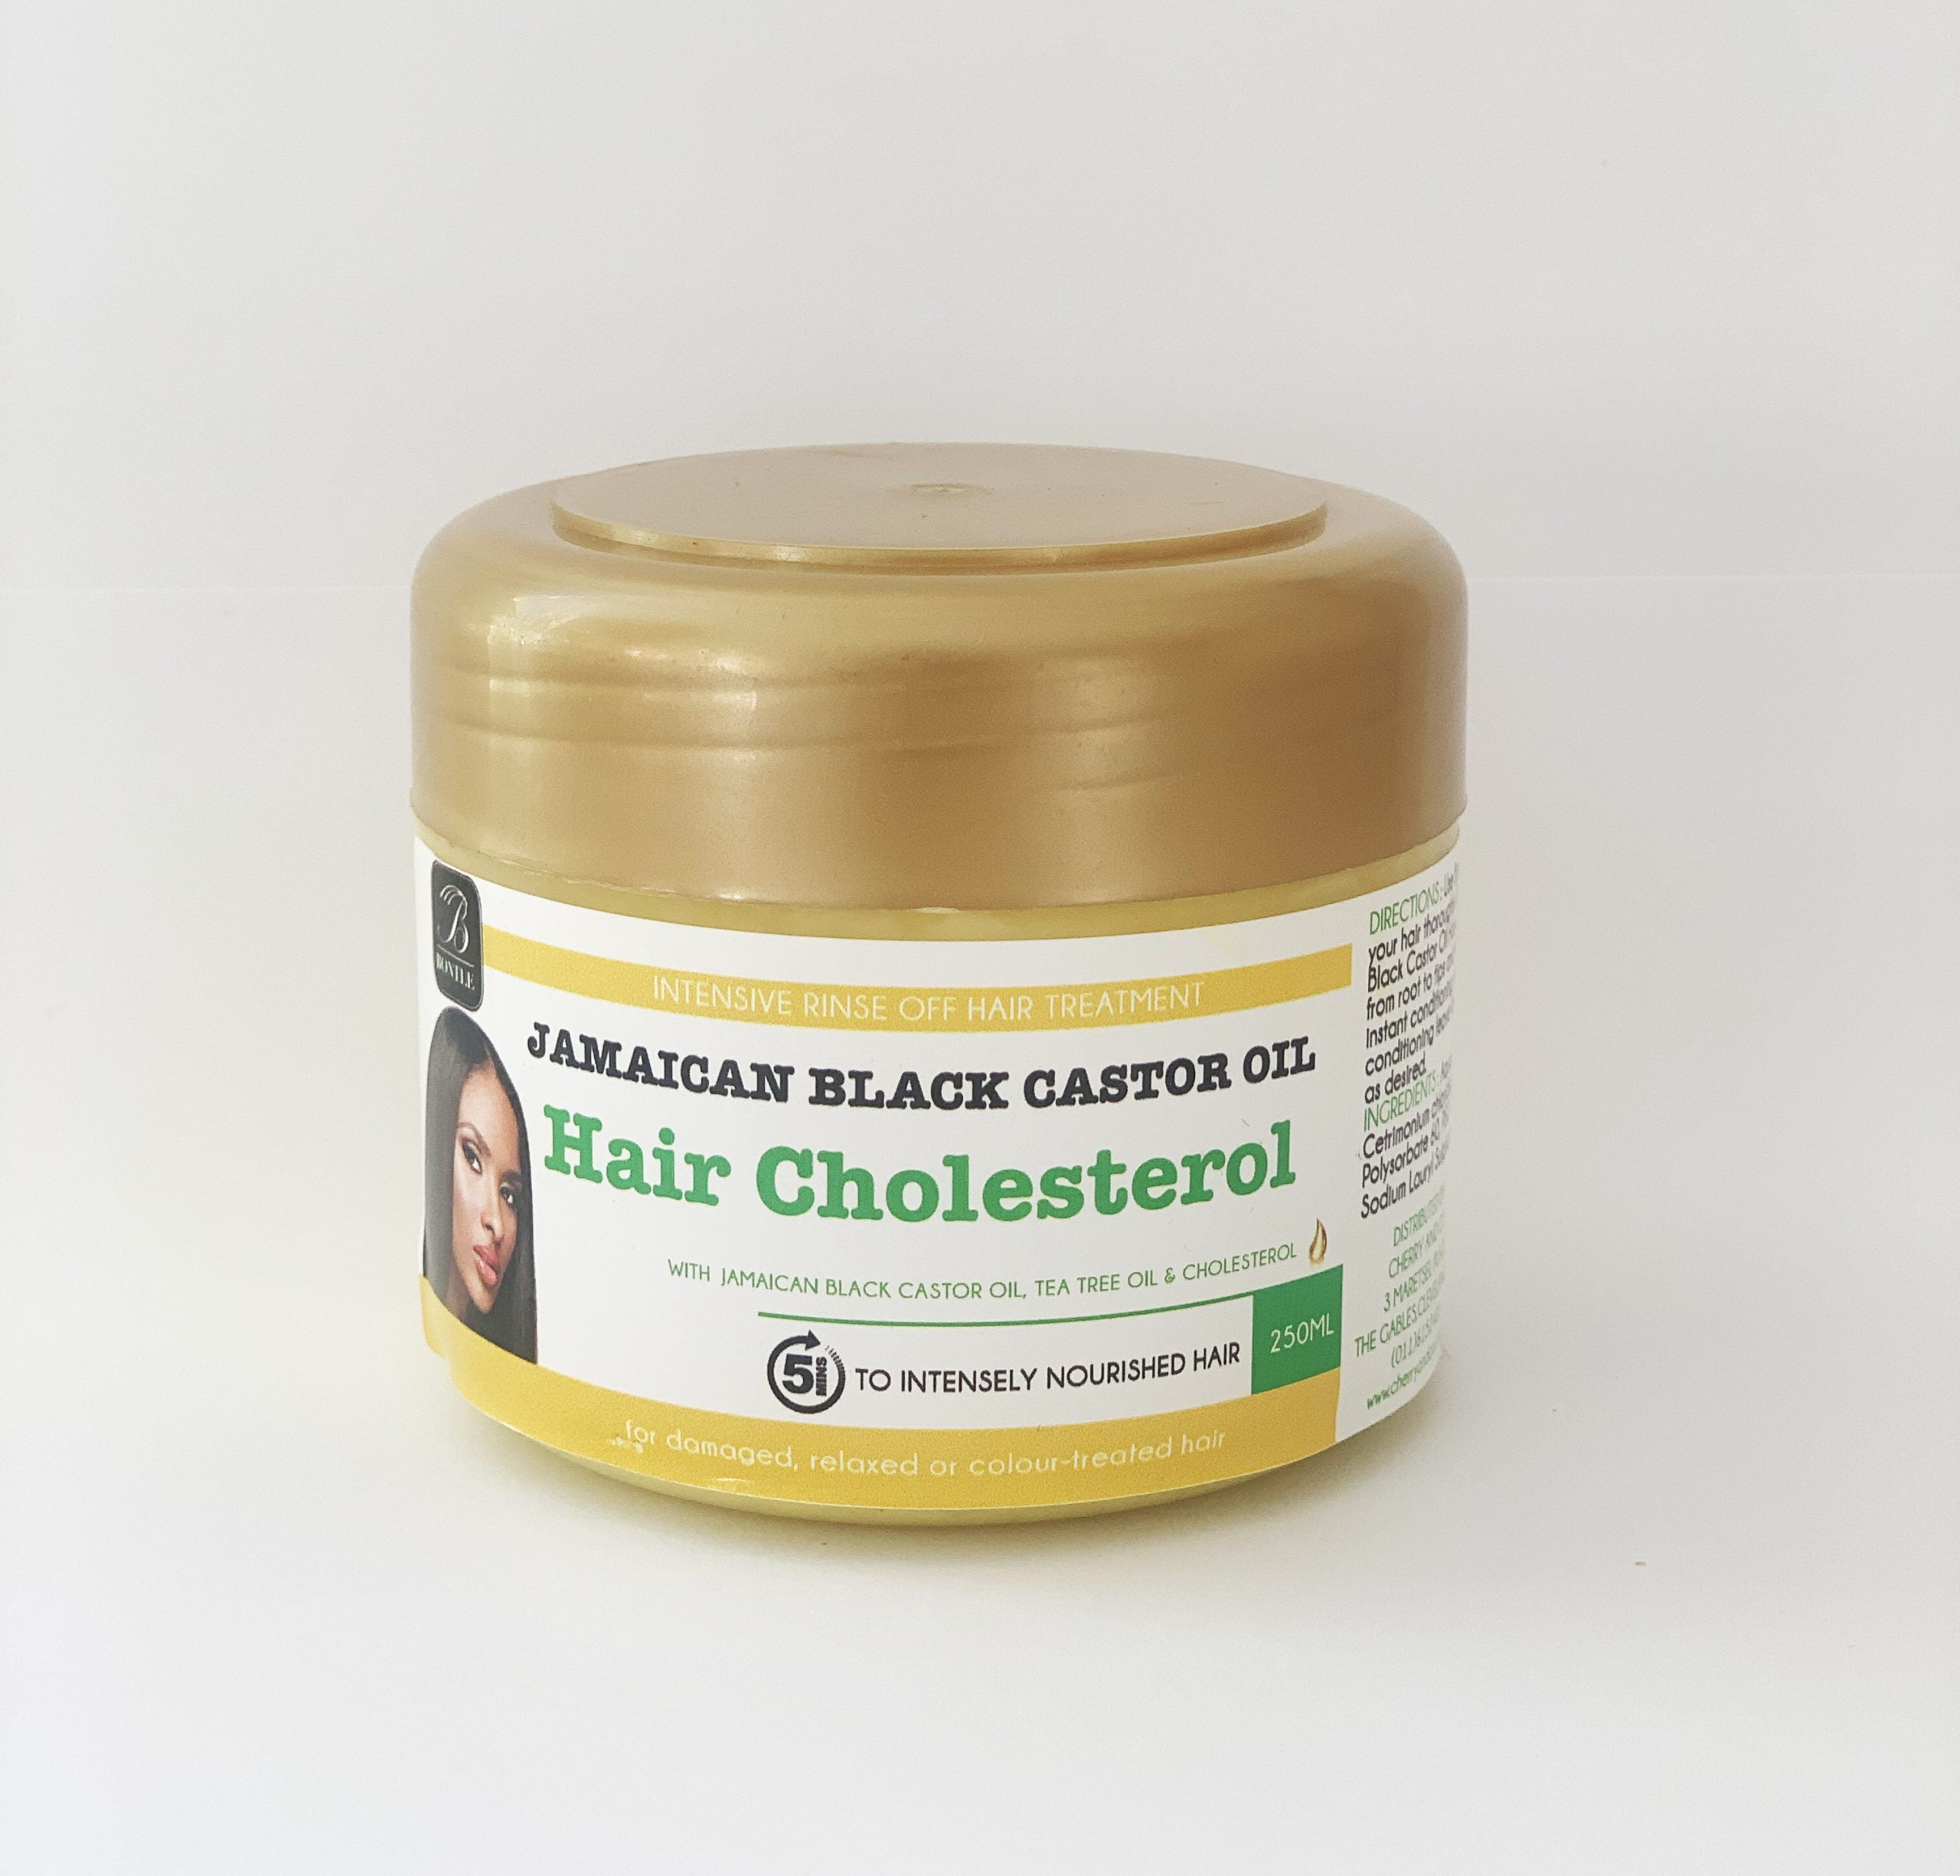 Bontle Hair Cholesterol with Jamaican Black Castor Oil 250ml Case (1 x 36)  - Cherry & Co